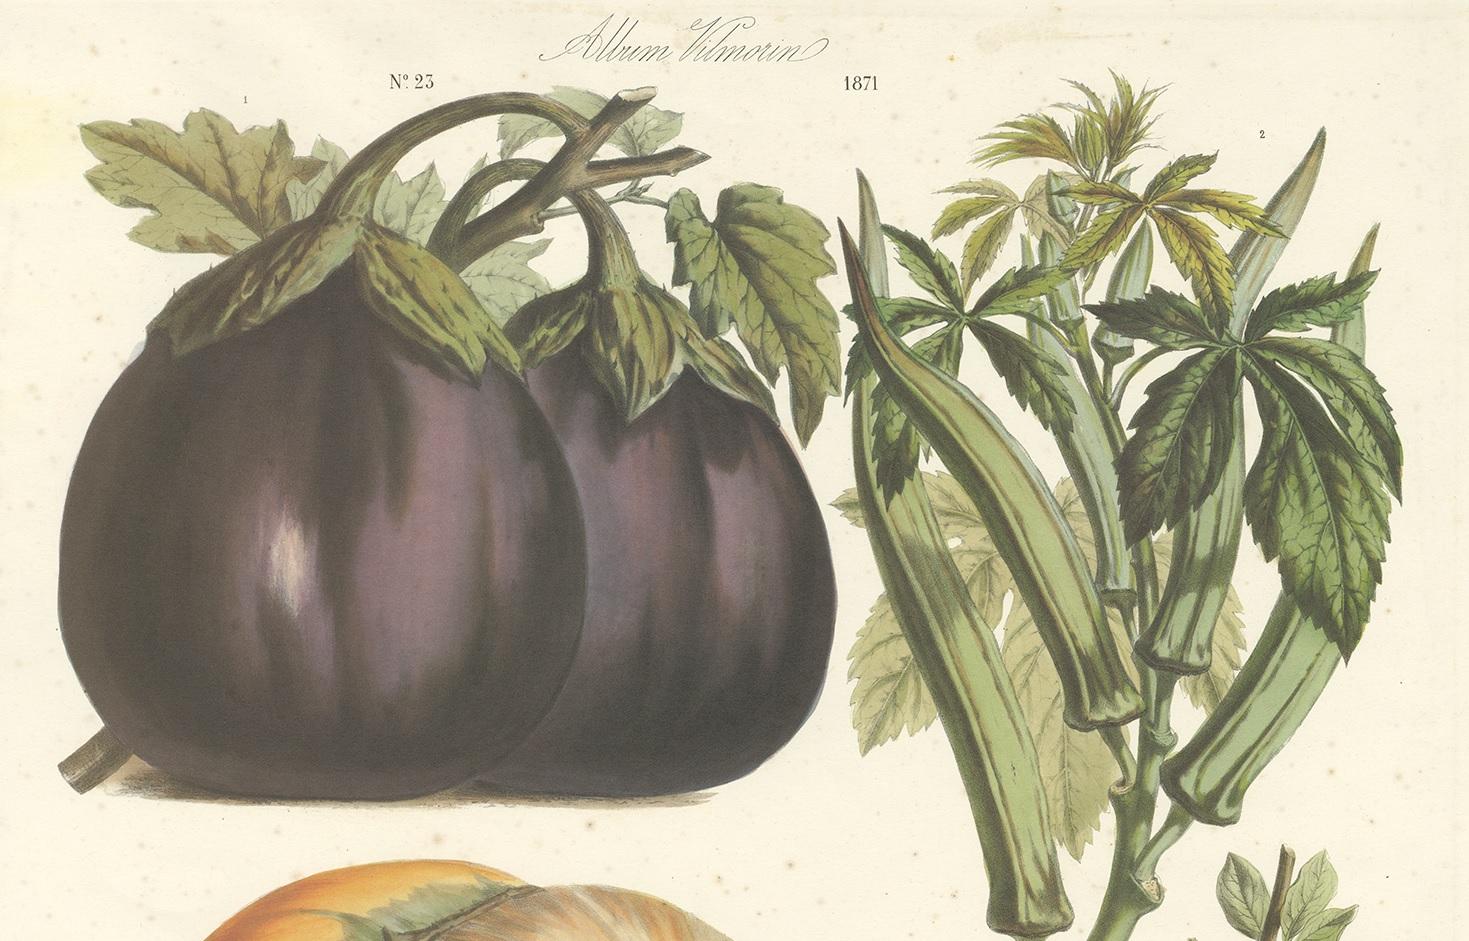 Beautiful large antique print depicting various vegetables. Depicted are an eggplant, okra, squash/pumpkin and radish. This print originates from 'Album Vilmorin' published in Paris, 1871.